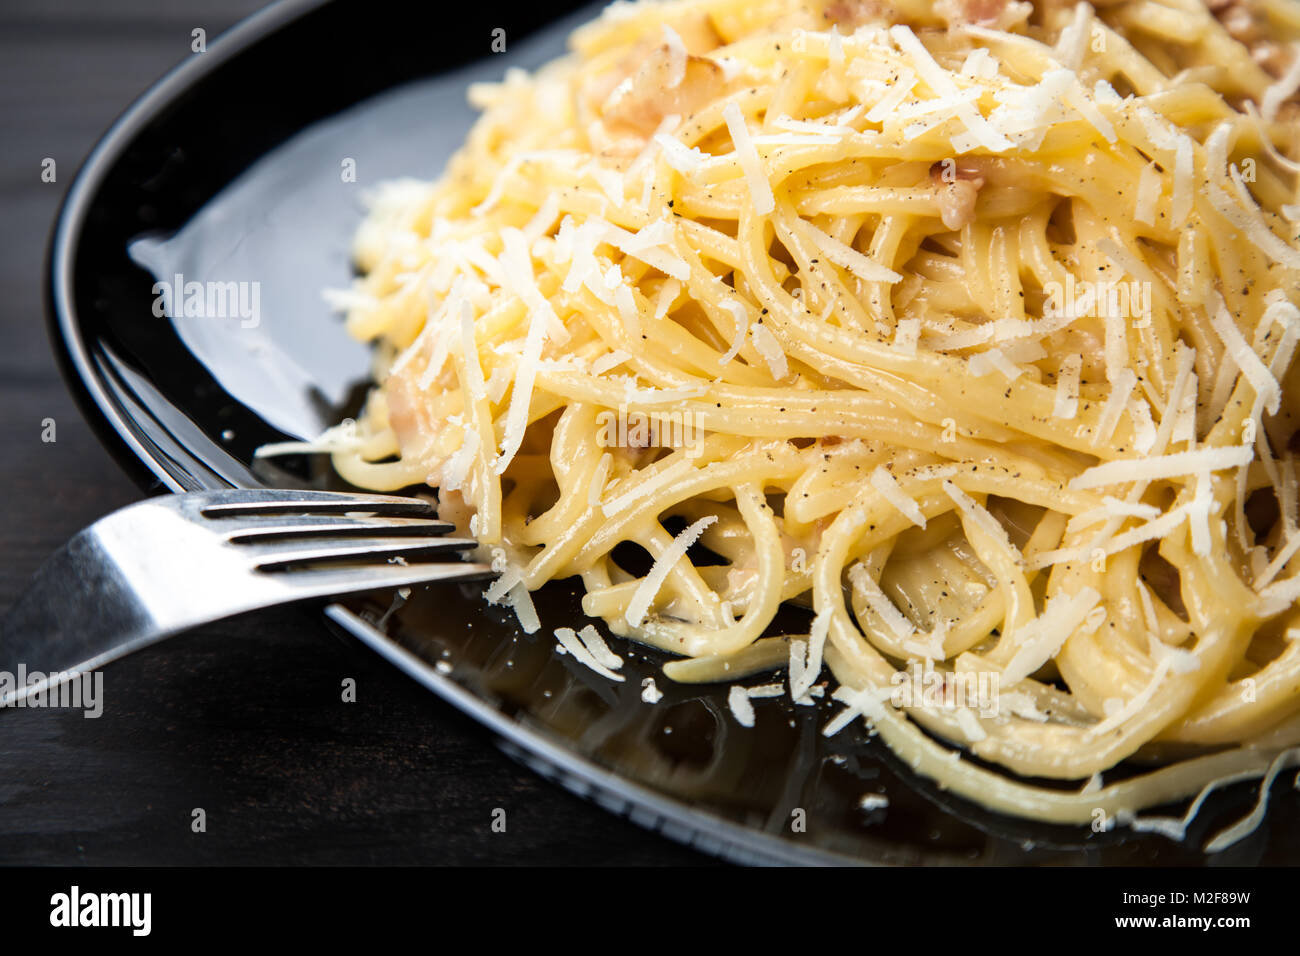 Spaghetti carbonara with egg and pancetta Stock Photo